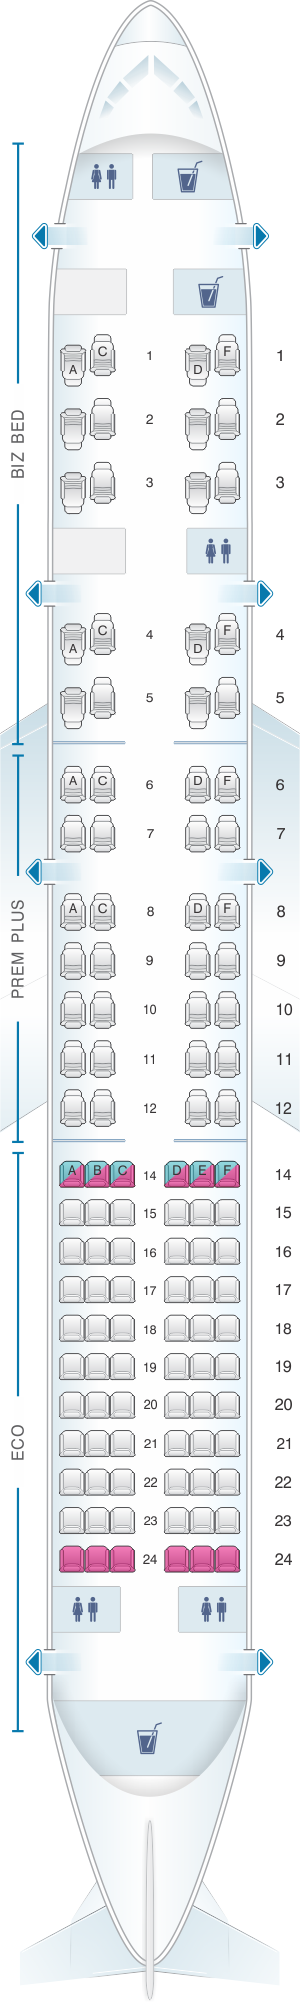 757 Seating Chart